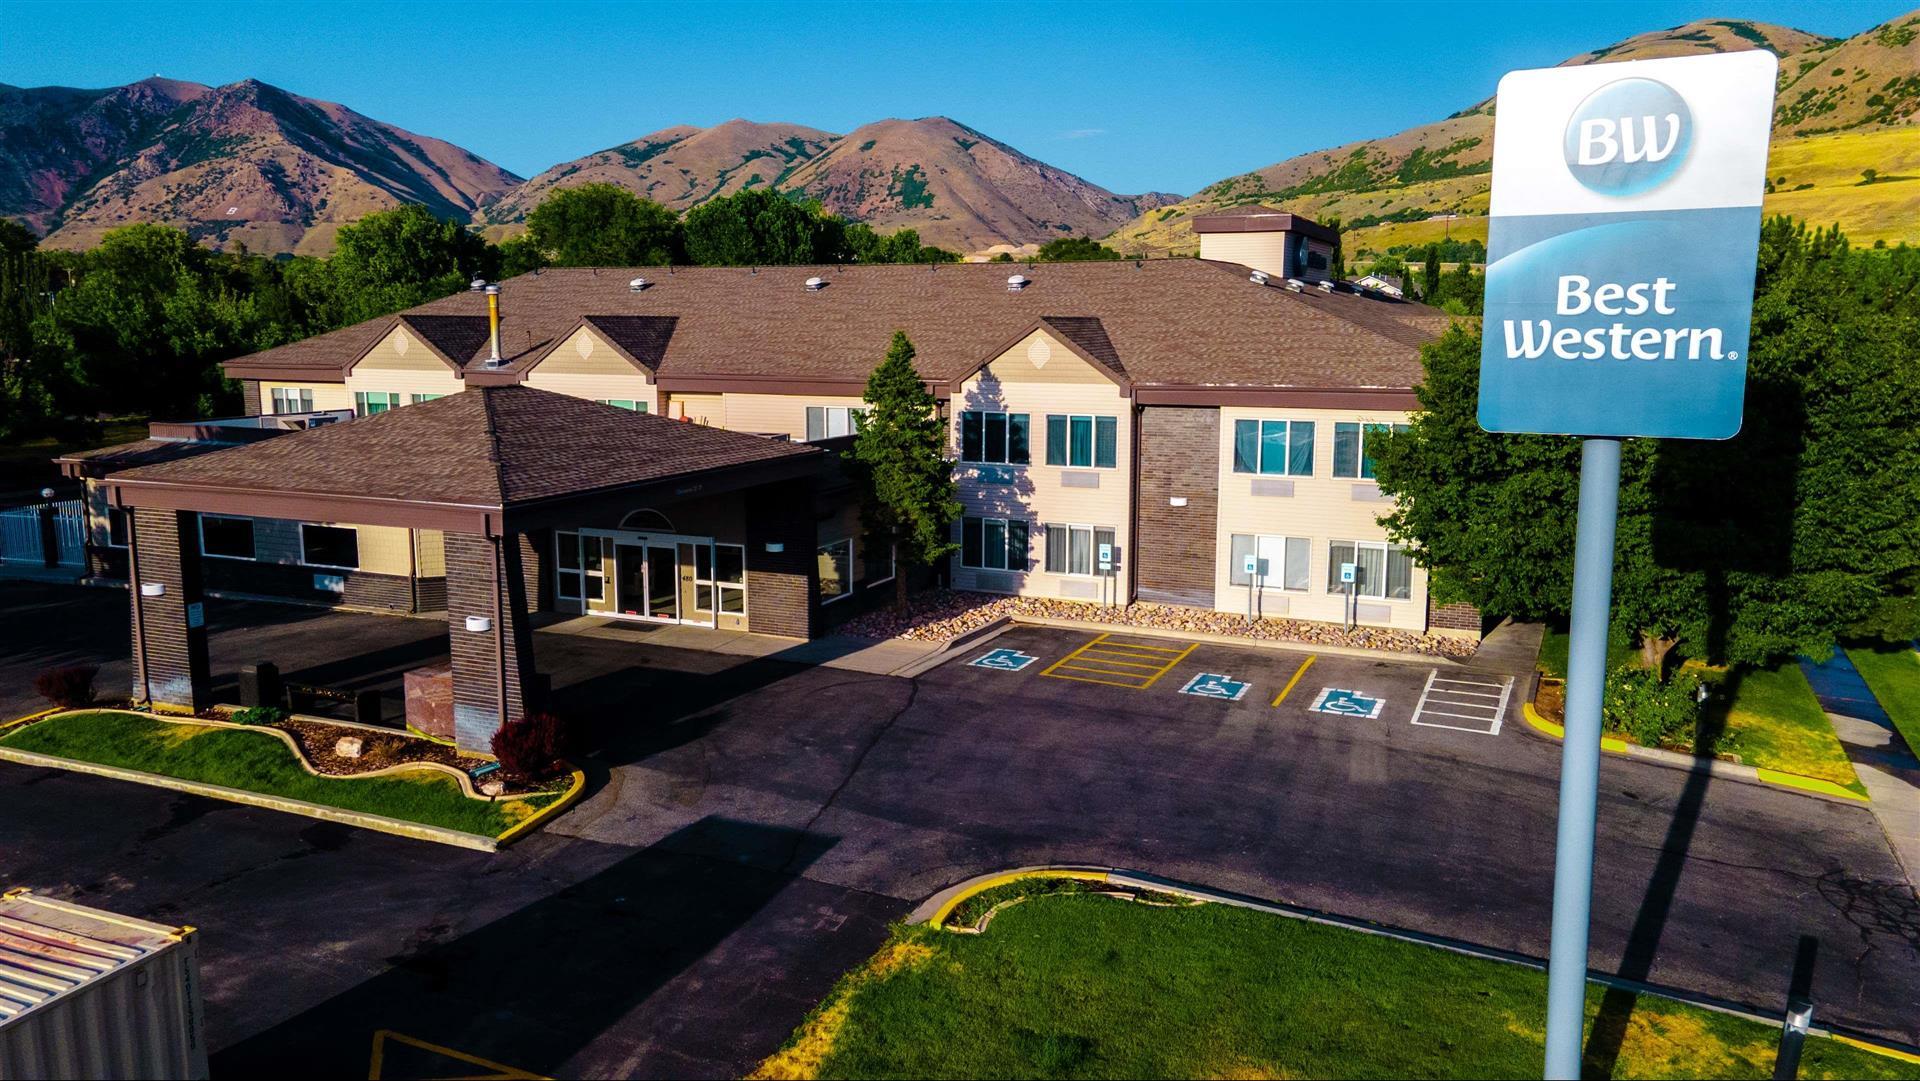 Best Western Brigham City Inn & Suites in Brigham City, UT